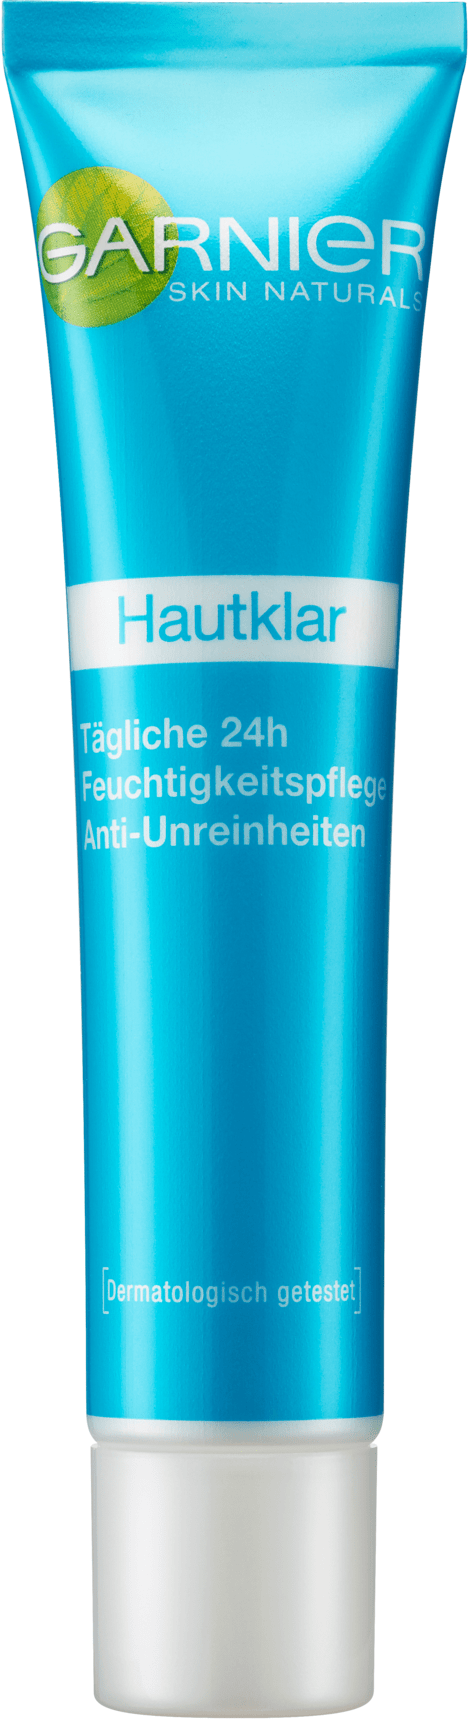 Garnier Hautklar Day Cream Skin Clear Moisturiser 24H, 40 Ml